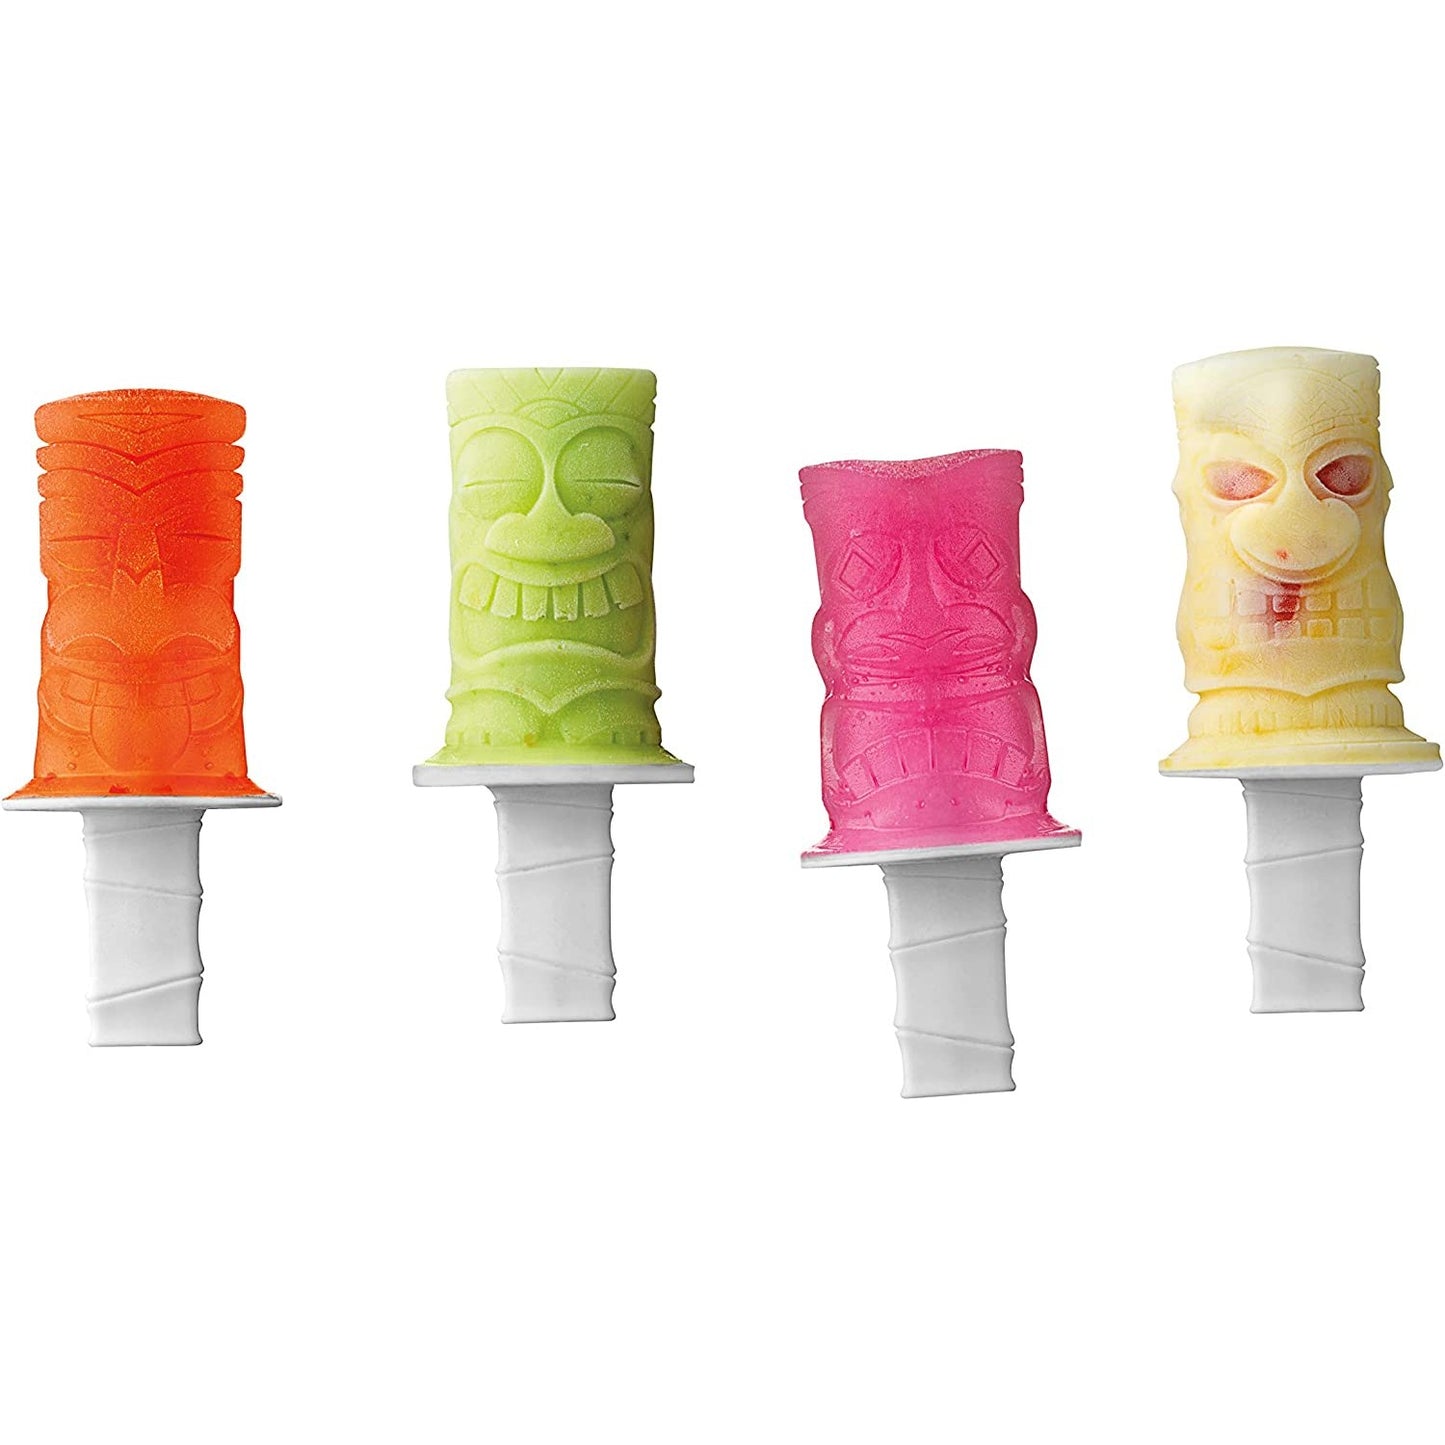 Four various colored Tiki ice pops on sticks.